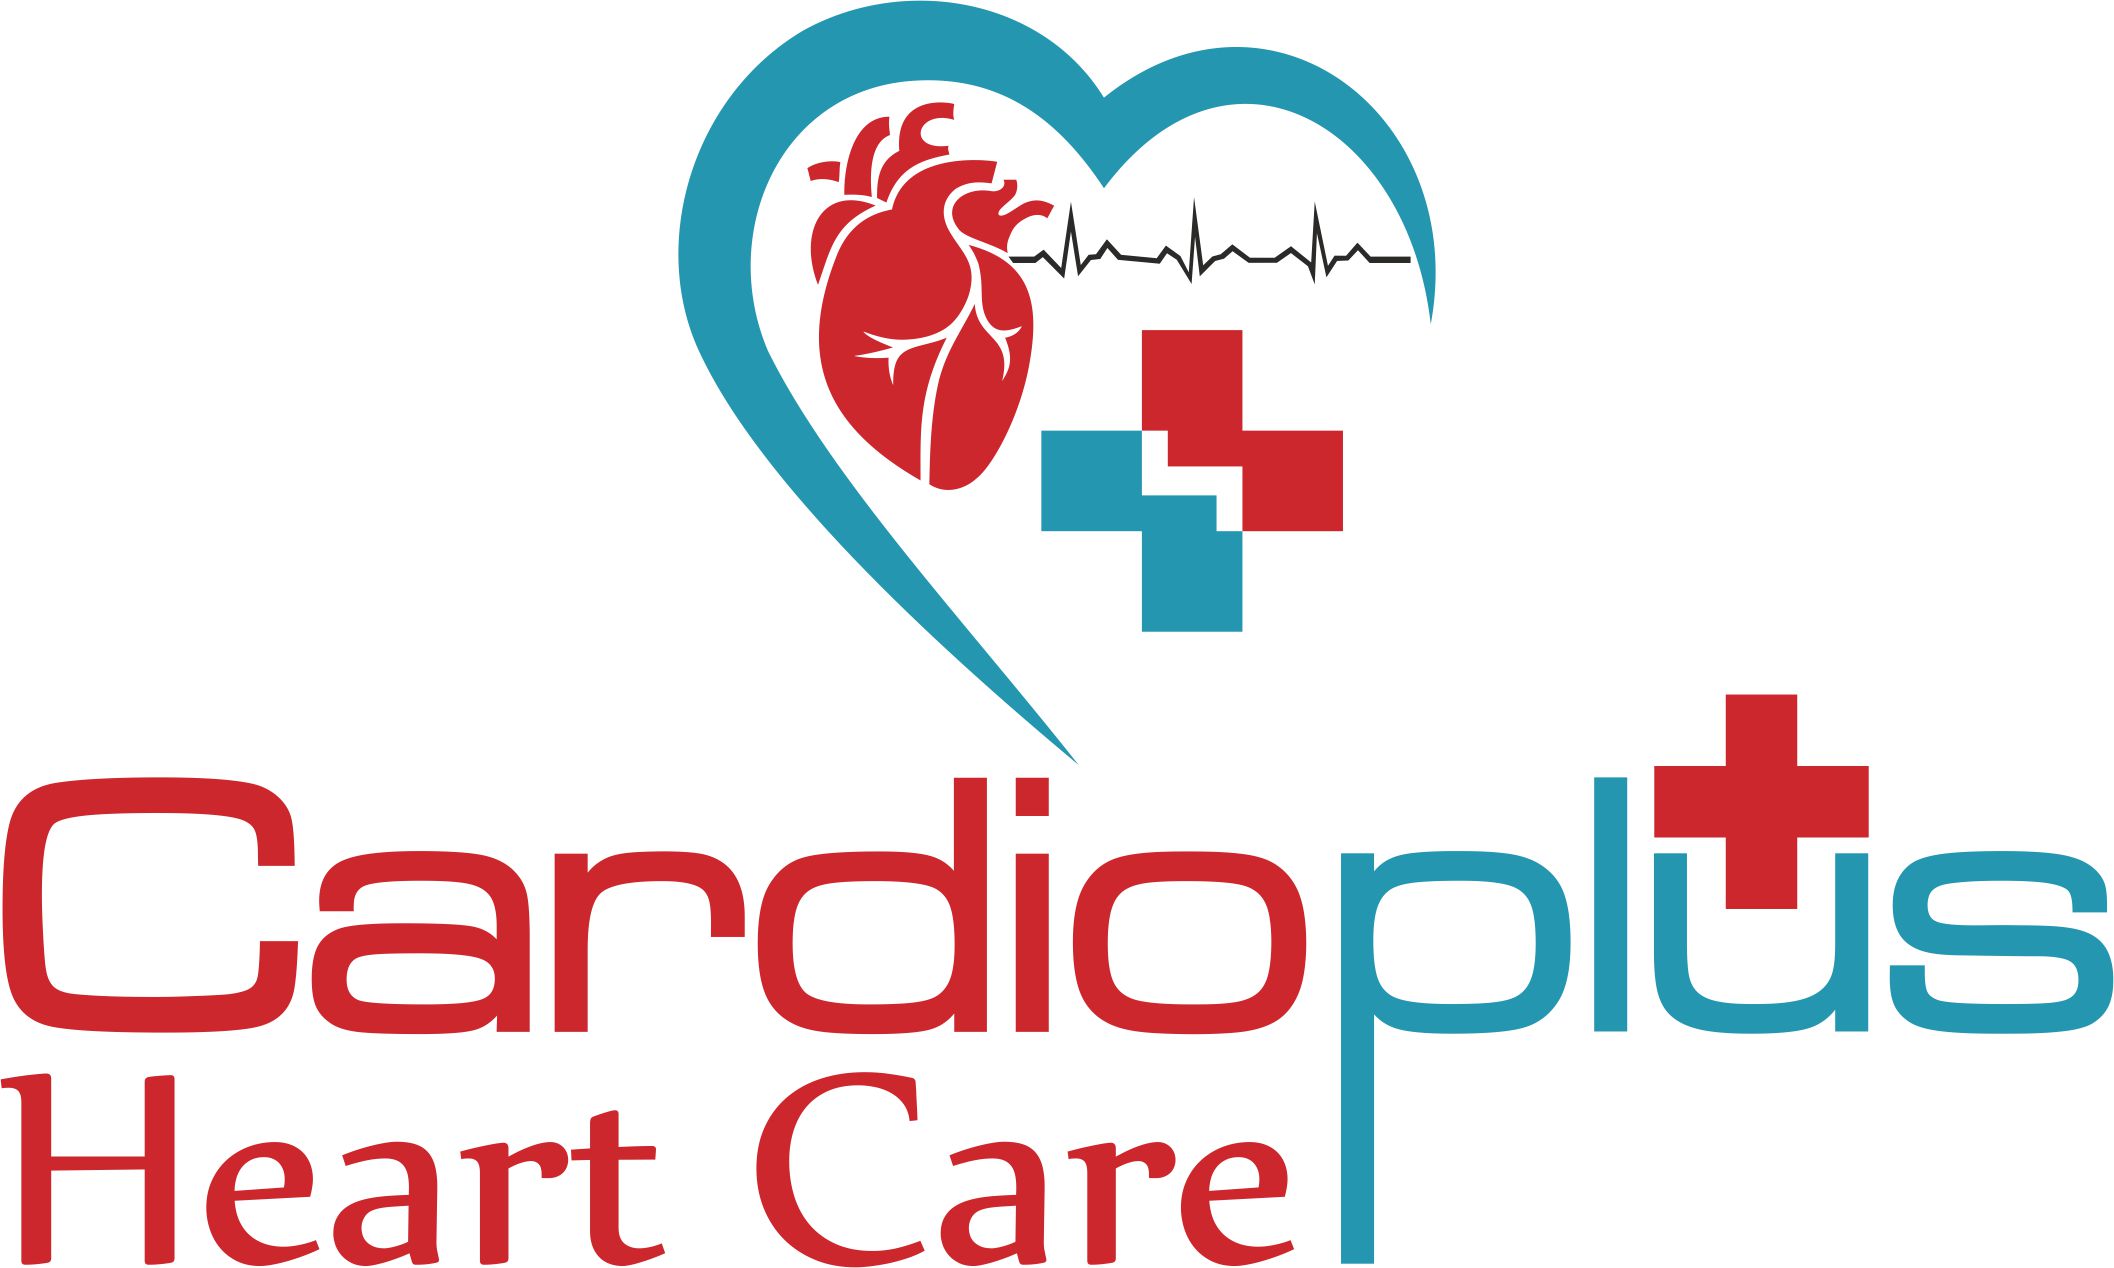 CardioPlus Heart Care|Hospitals|Medical Services